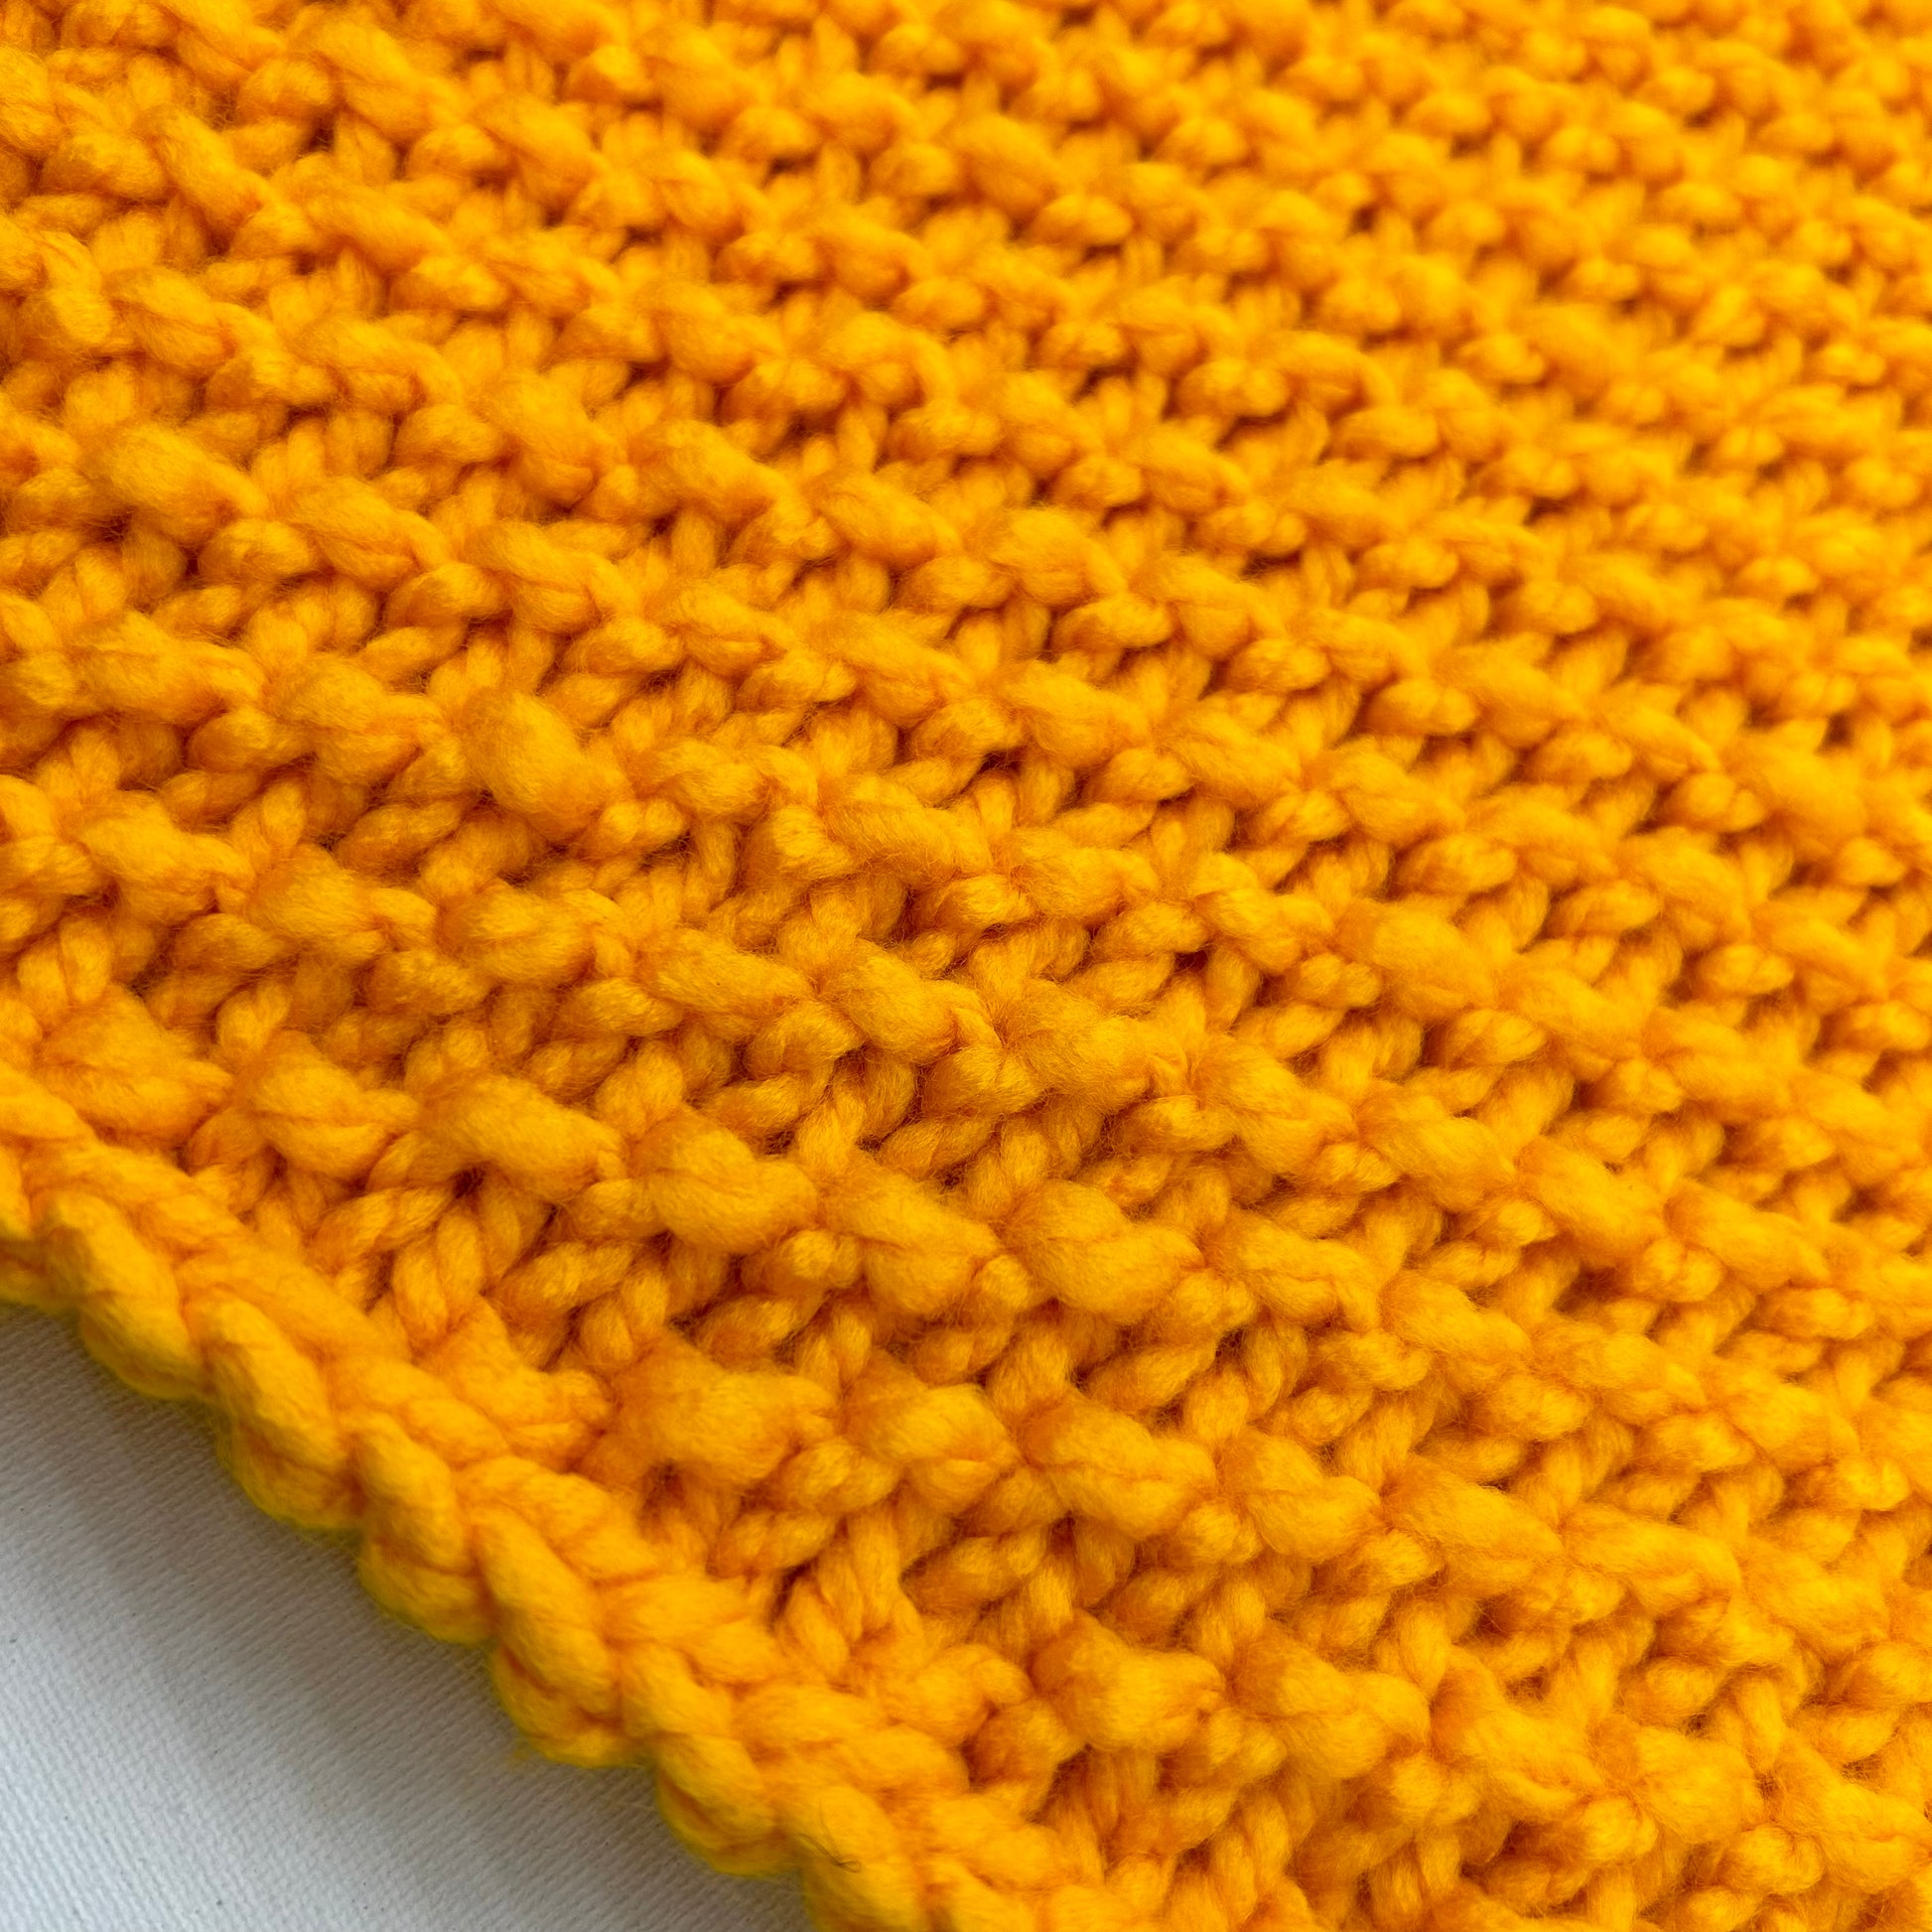 twisted snood knitting kit